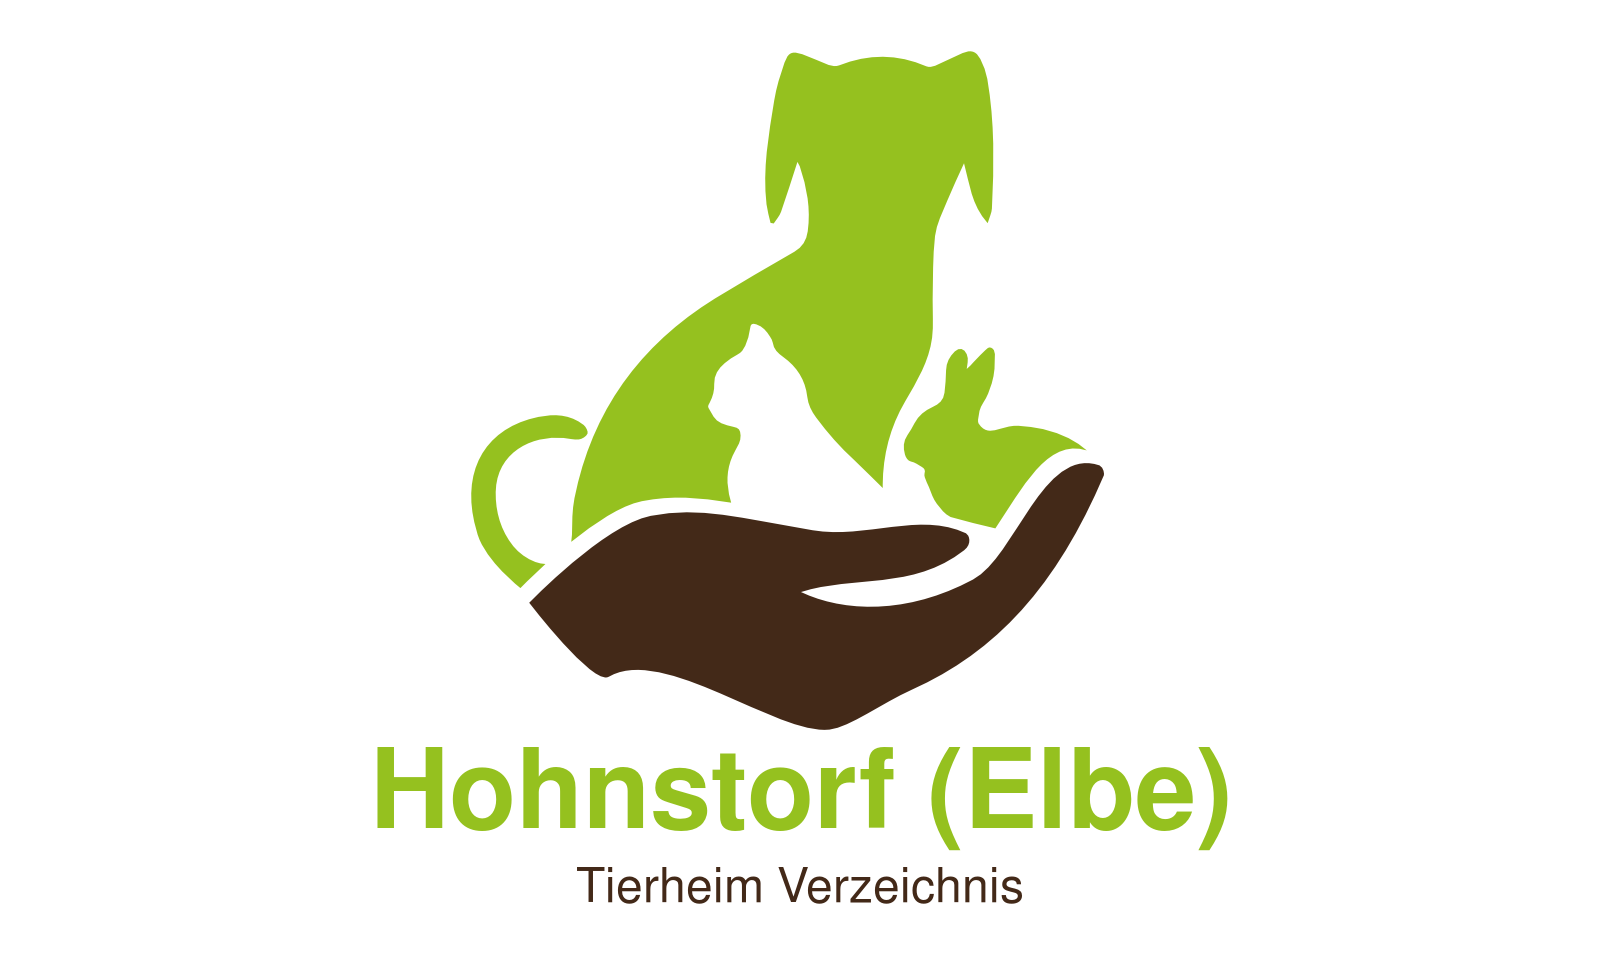 Tierheim Hohnstorf (Elbe)